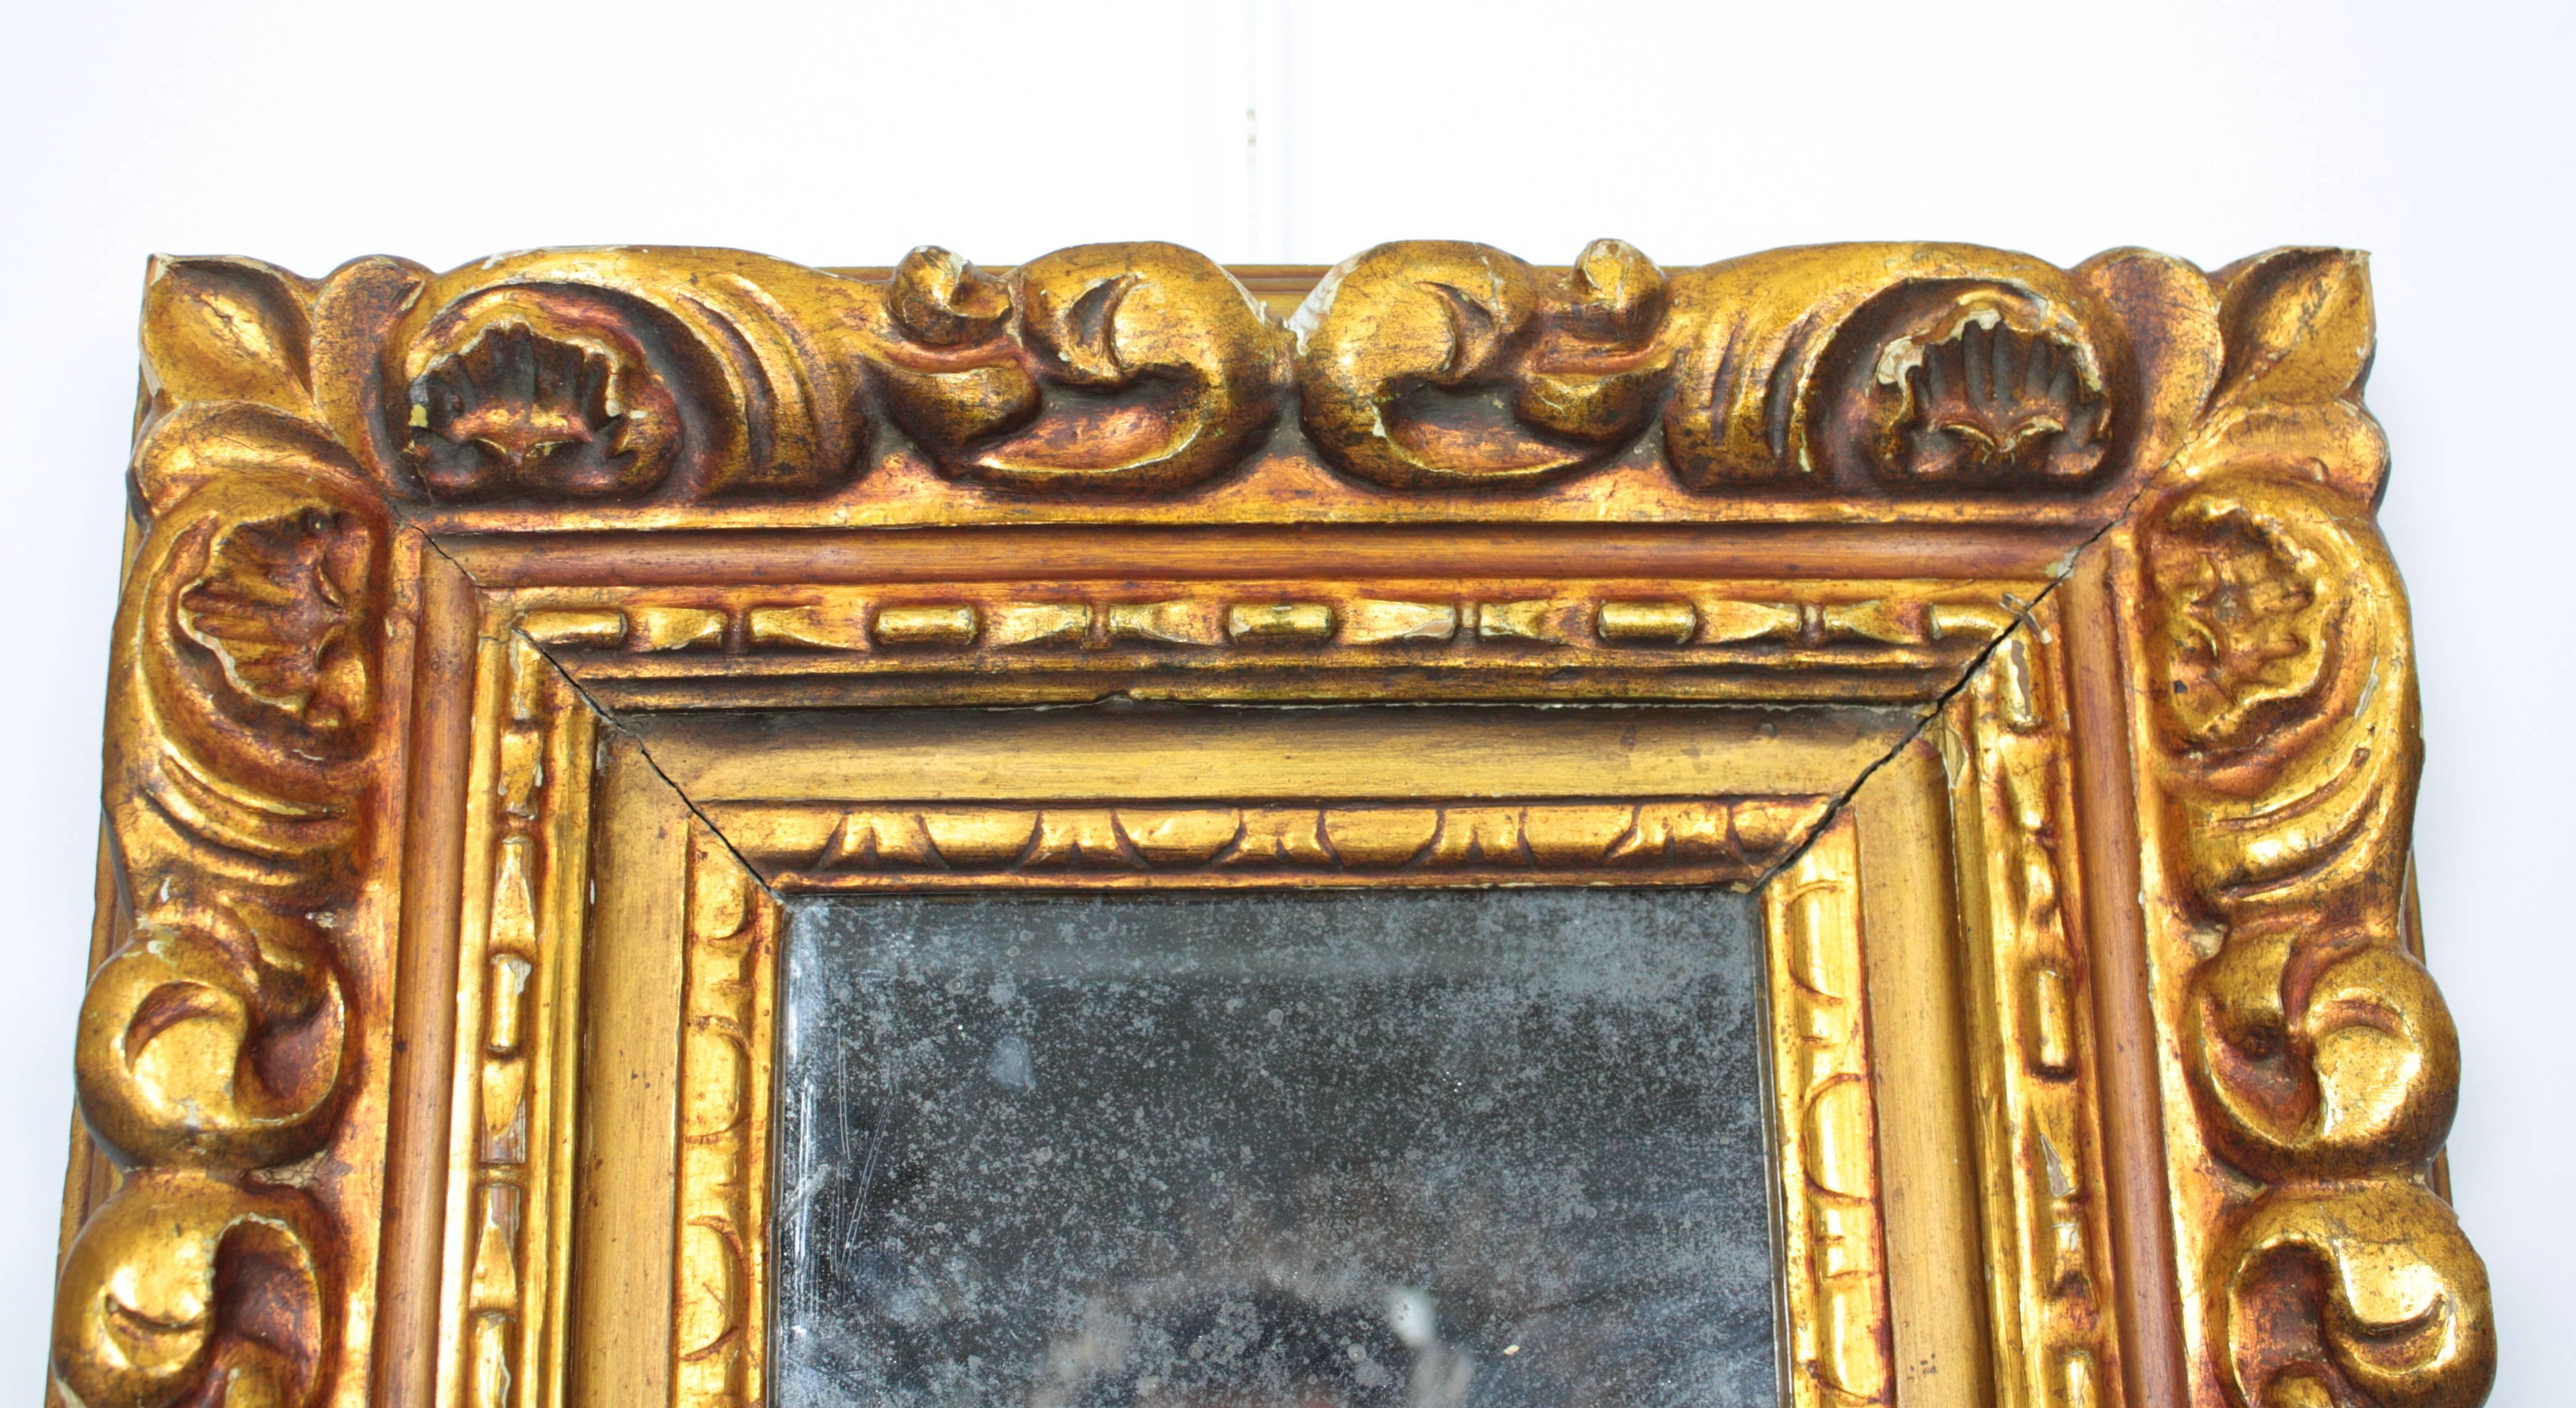 Baroque Miroir / cadre baroque espagnol en bois doré sculpté en vente